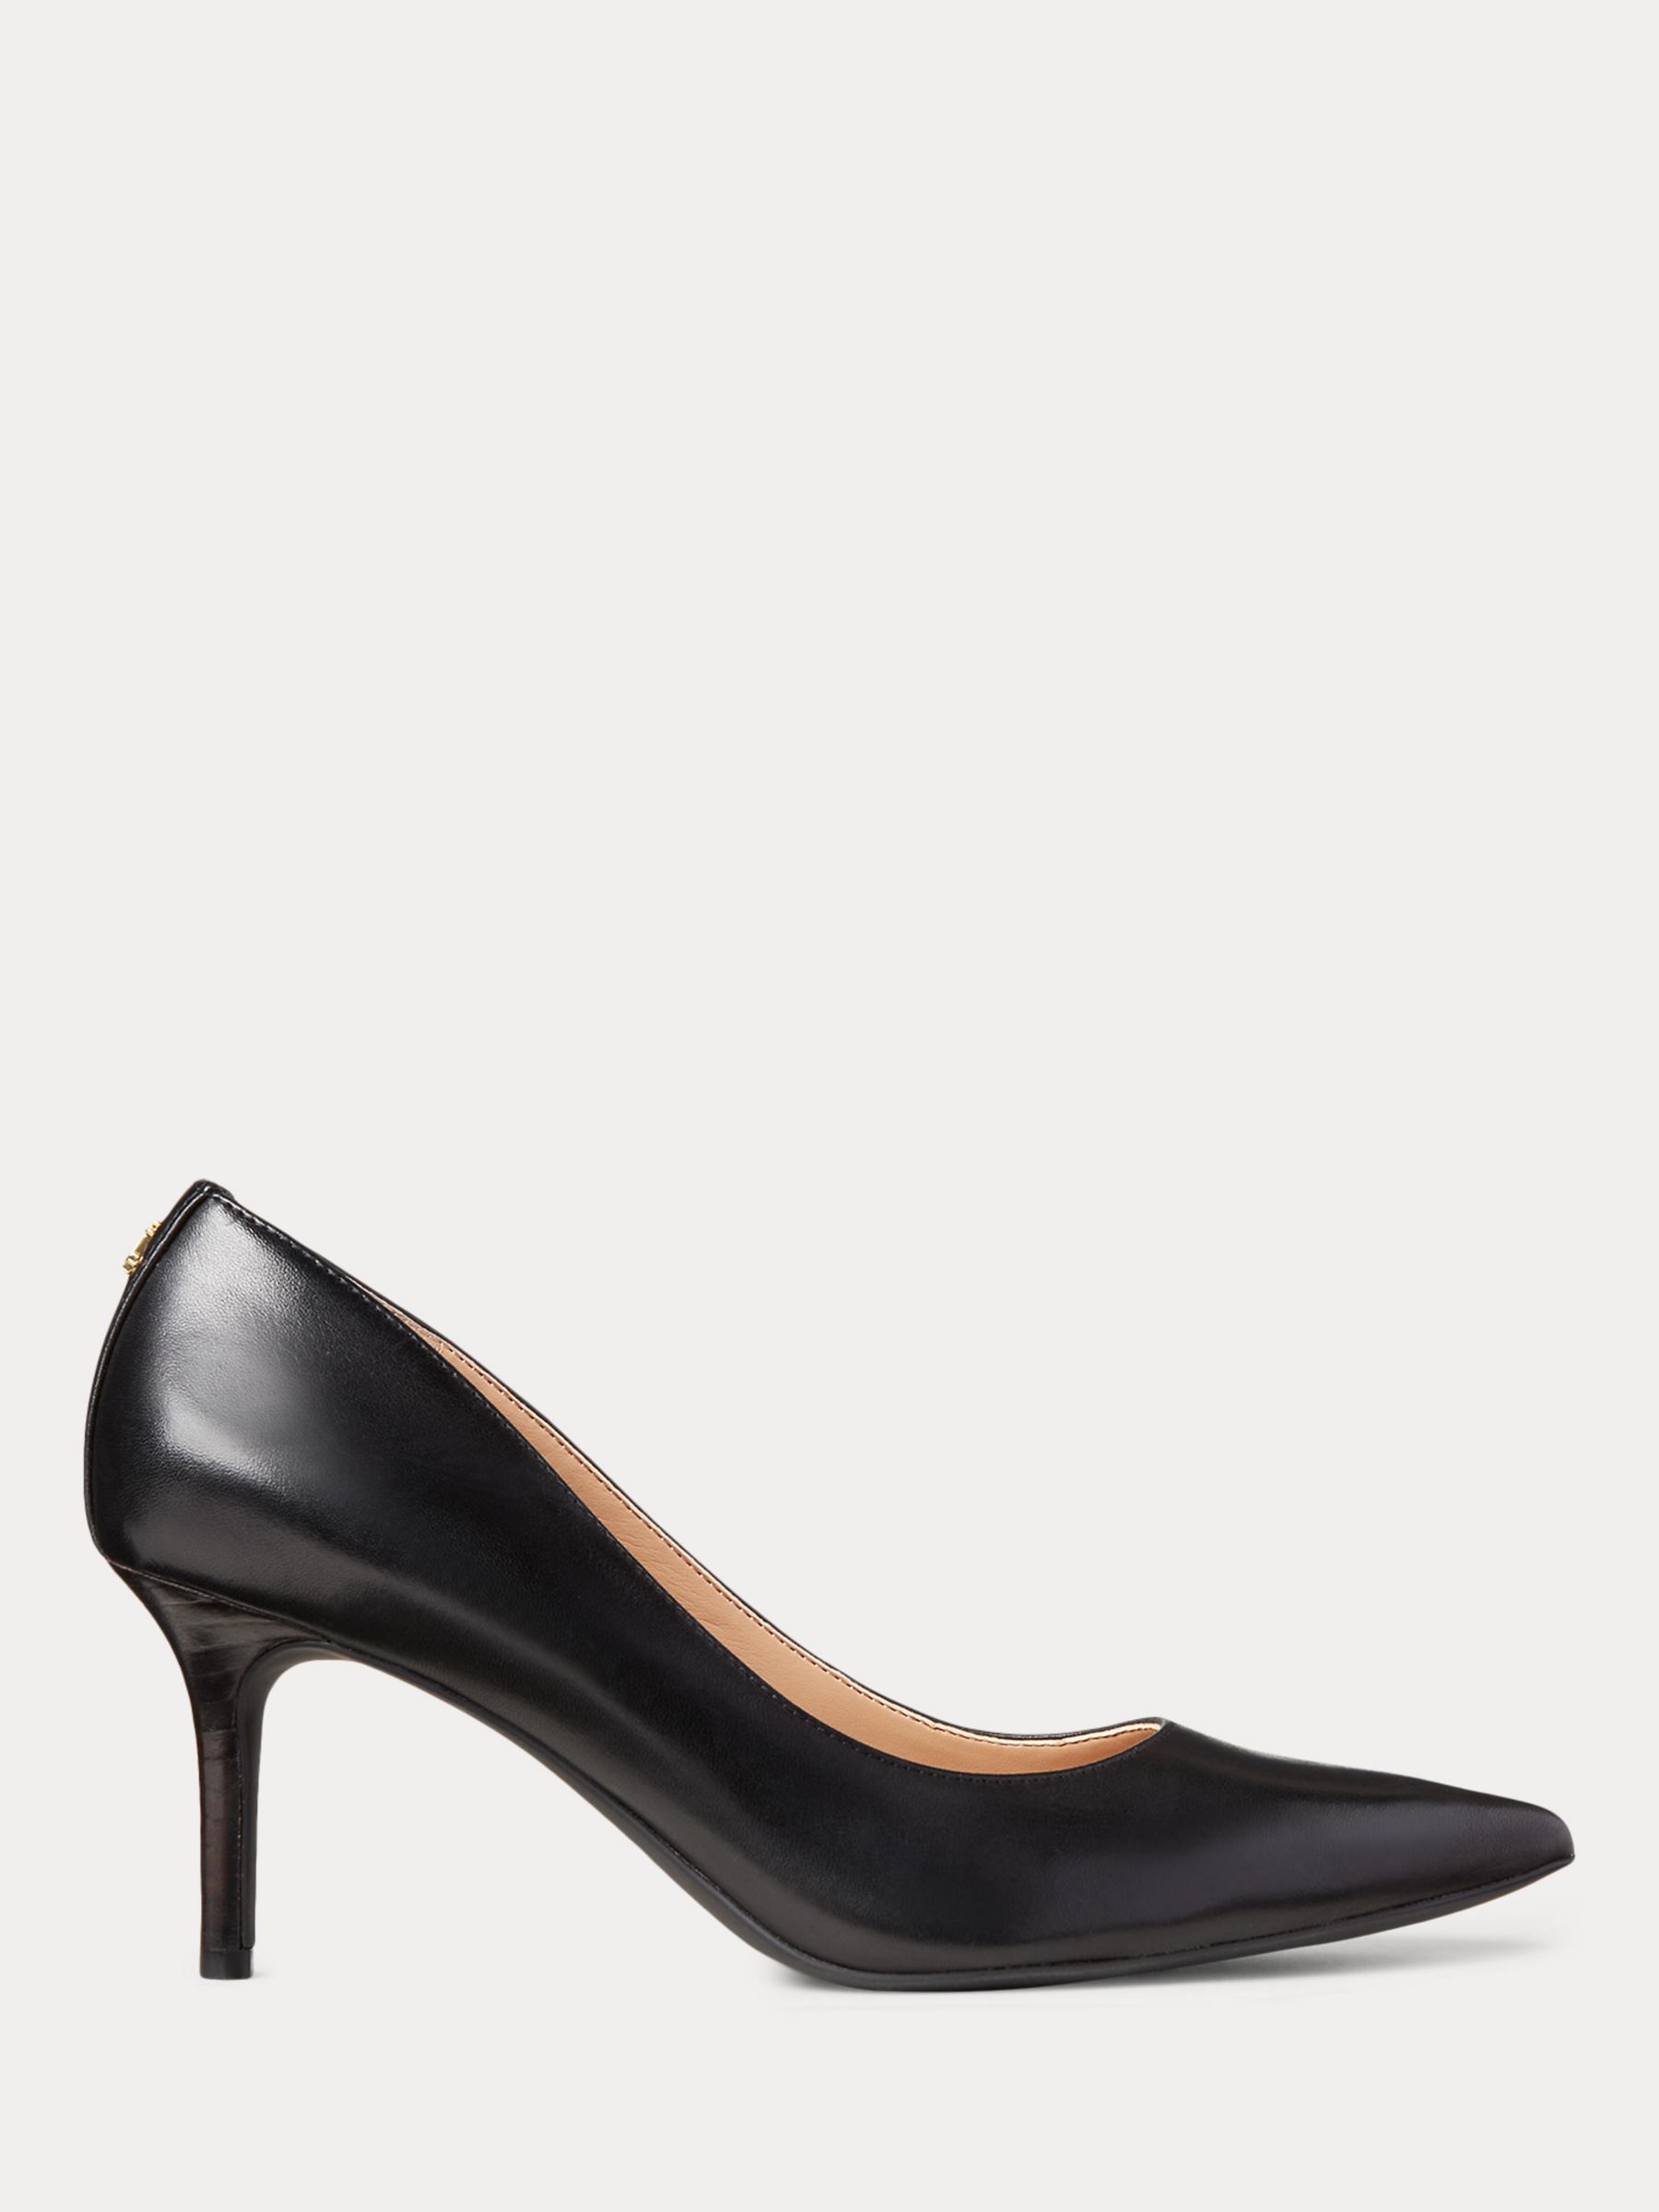 Lauren Ralph Lauren Lanette Leather Stiletto Heel Court Shoes, Black